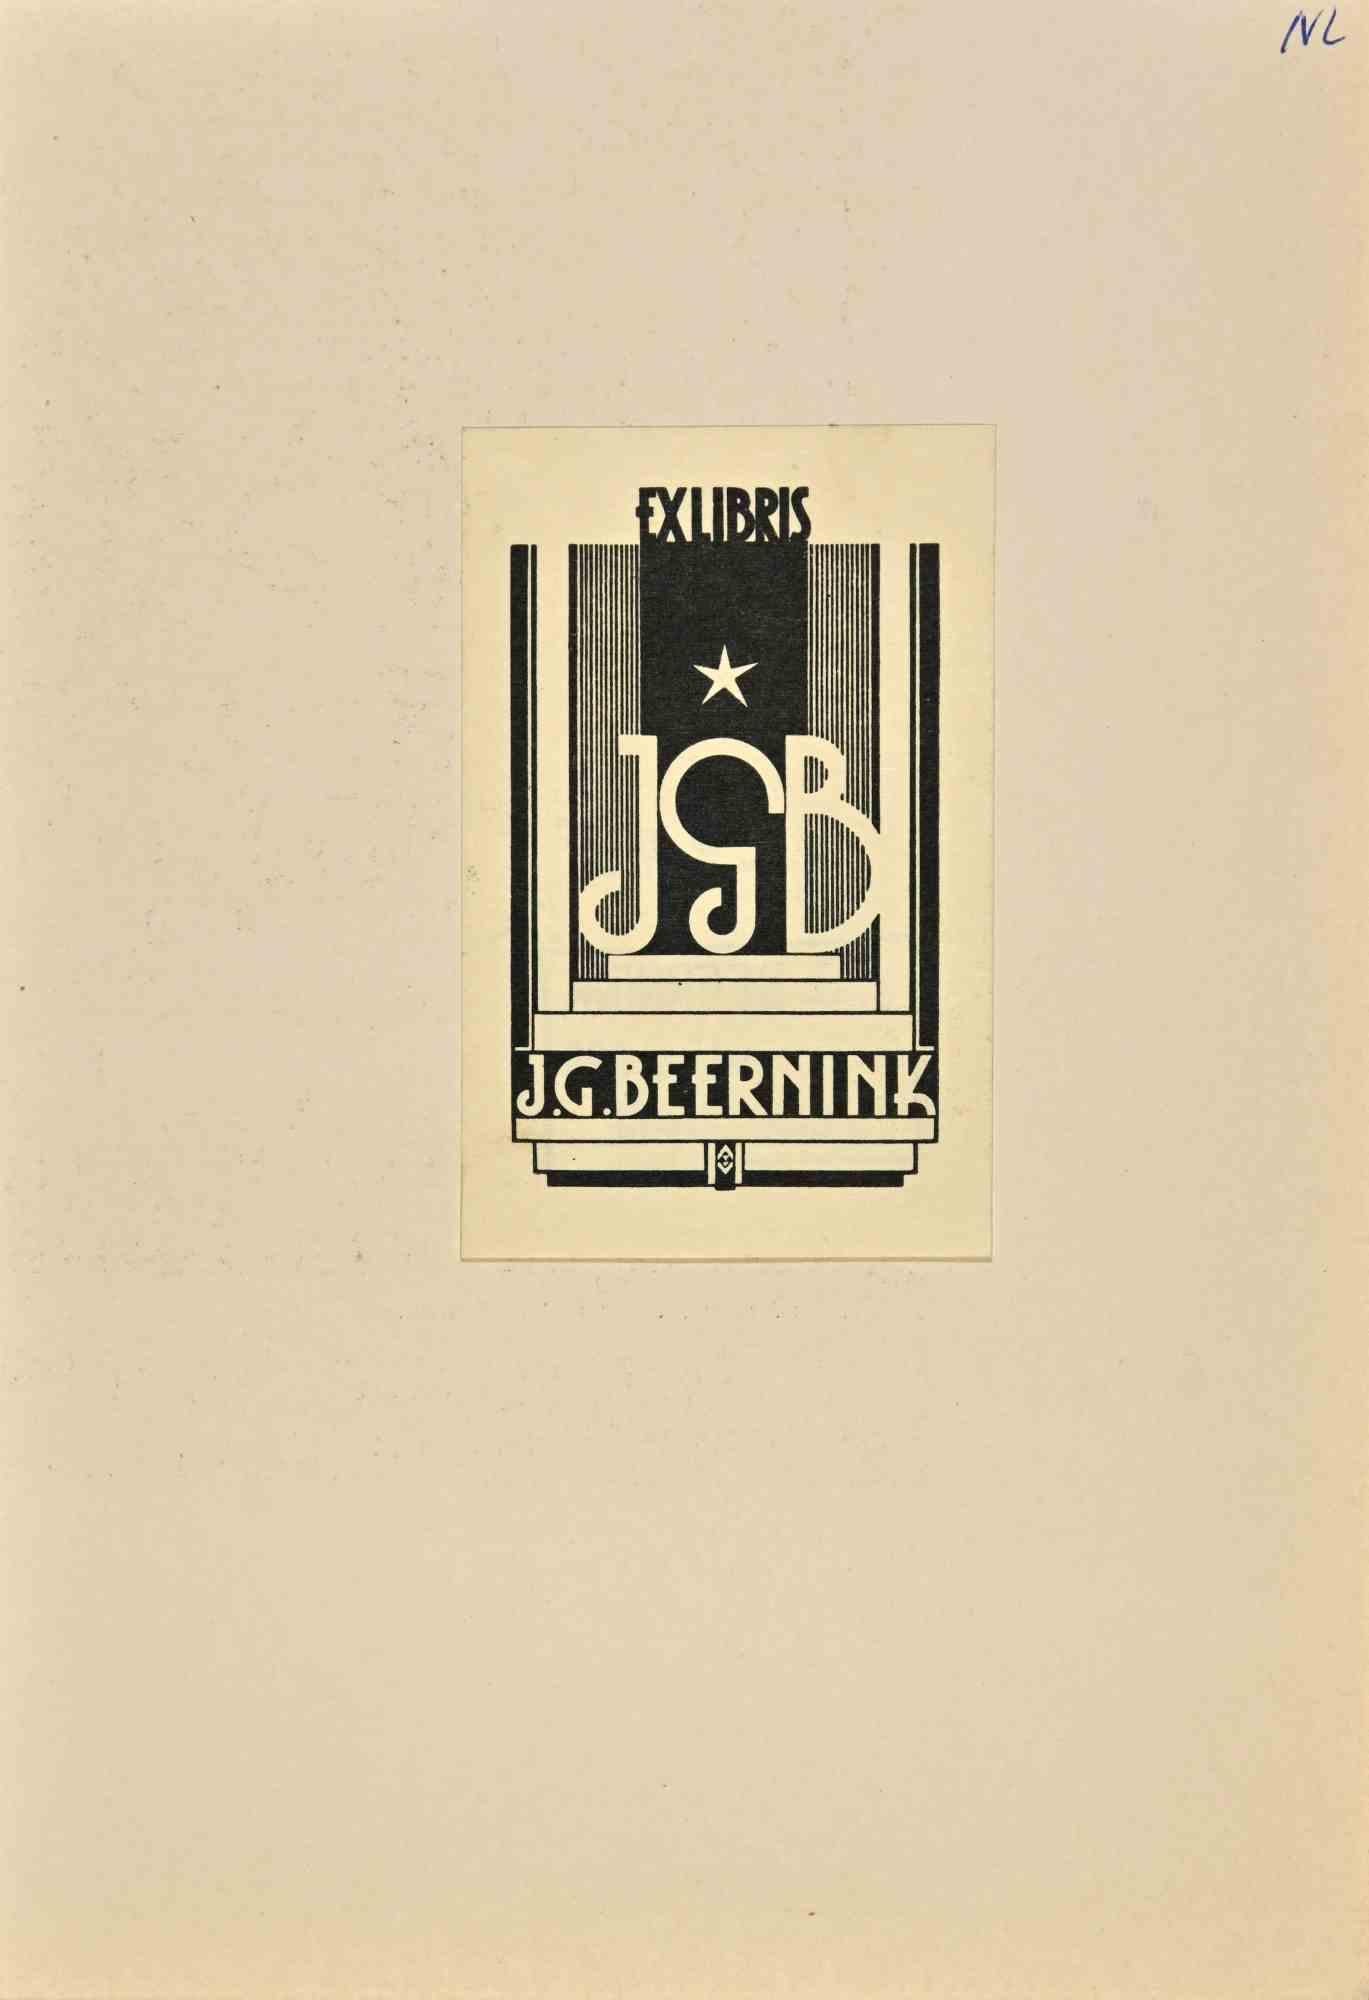 Unknown Figurative Print - Ex Libris - J. G. Beernink - Woodcut - 1932